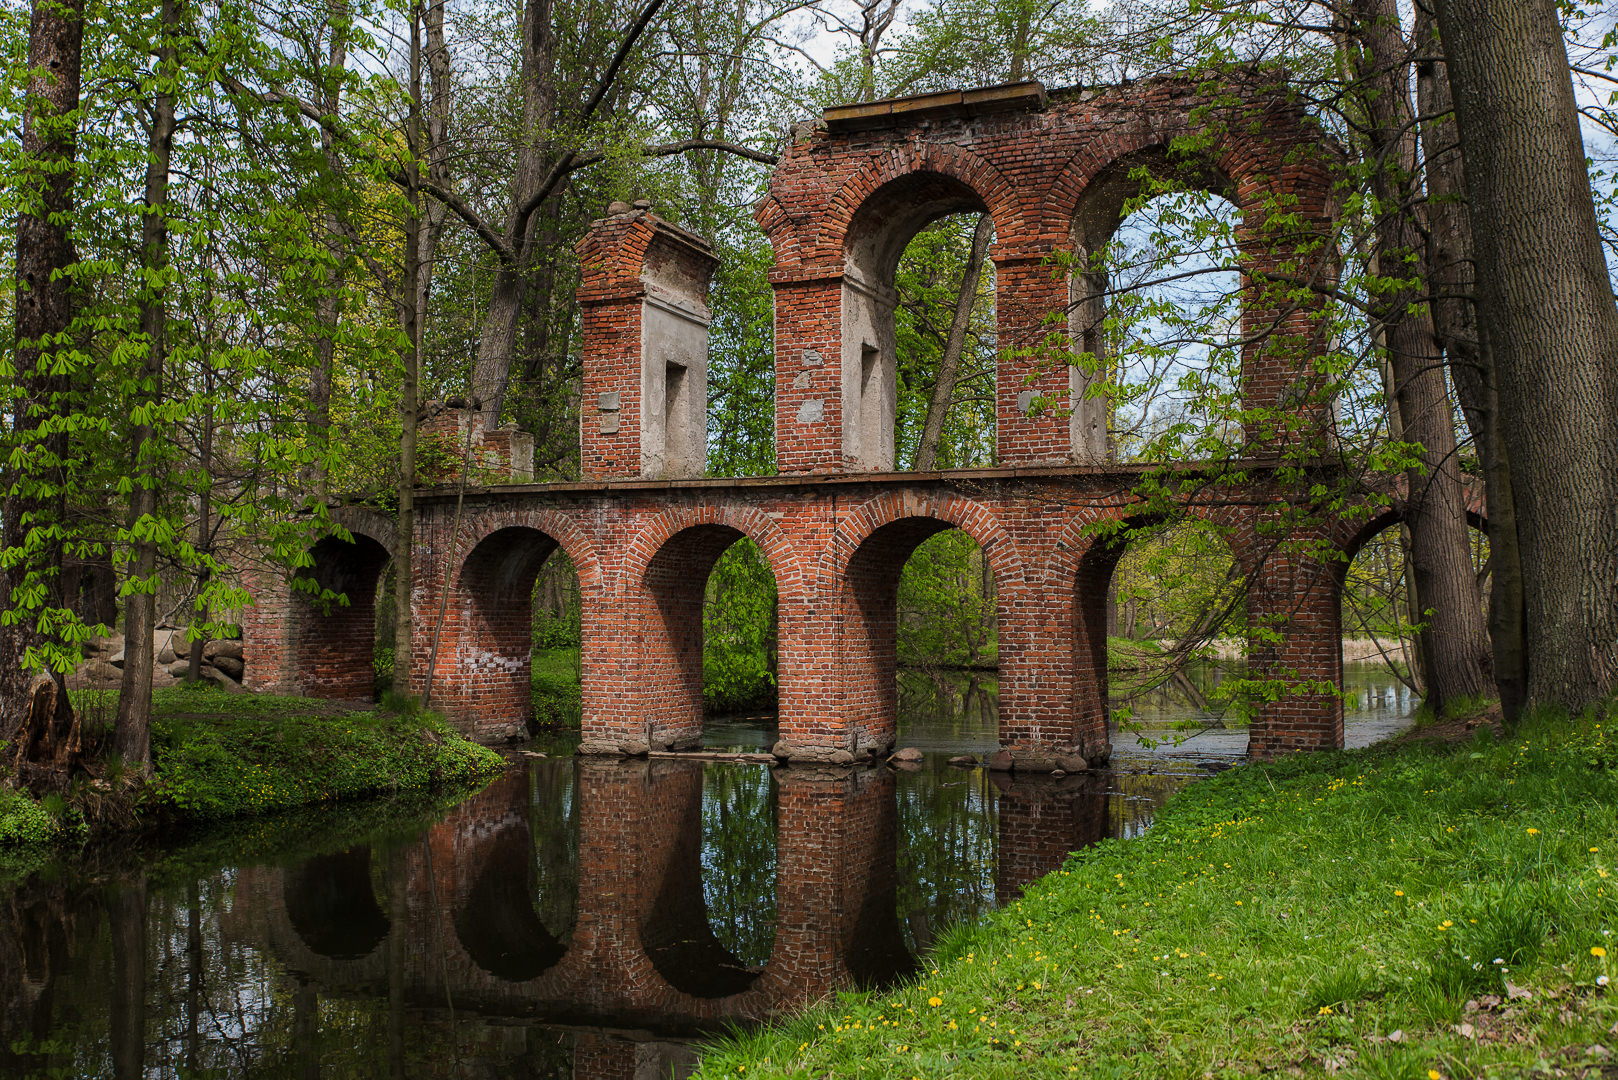 Roman Aqueduct by Grace Sobania